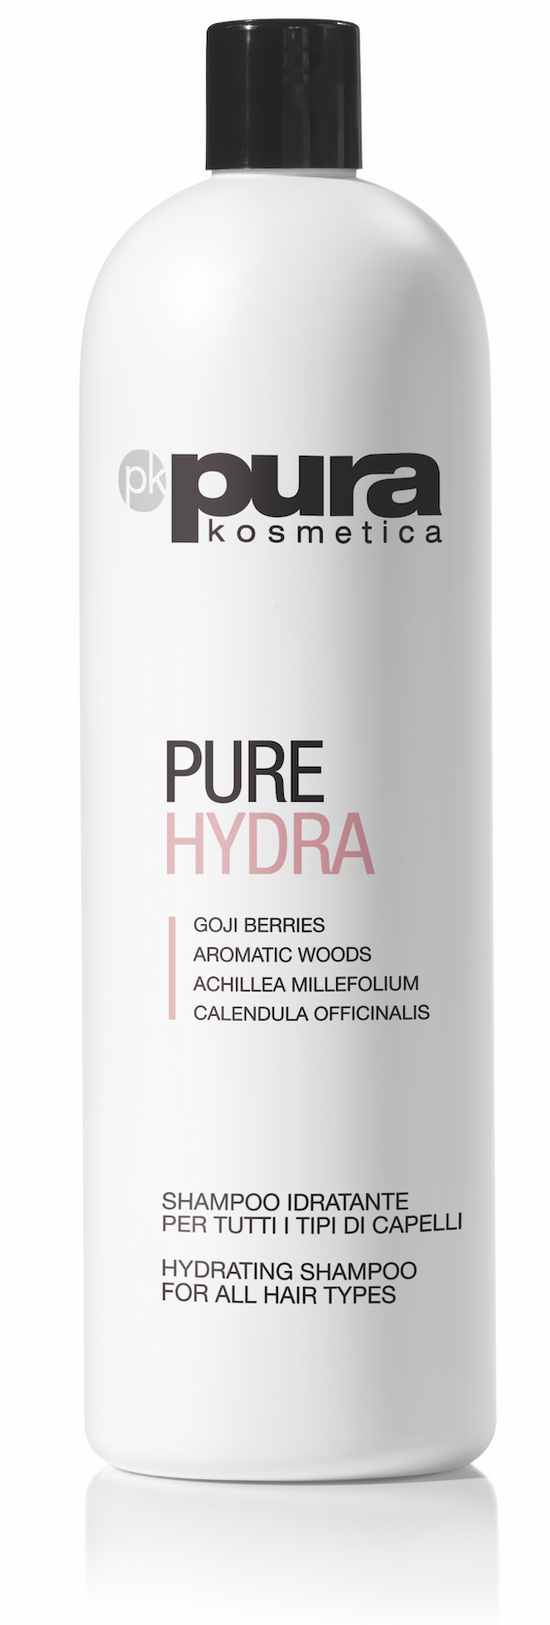 Pura Kosmetica Pure Hydra Shampoo 1000ml